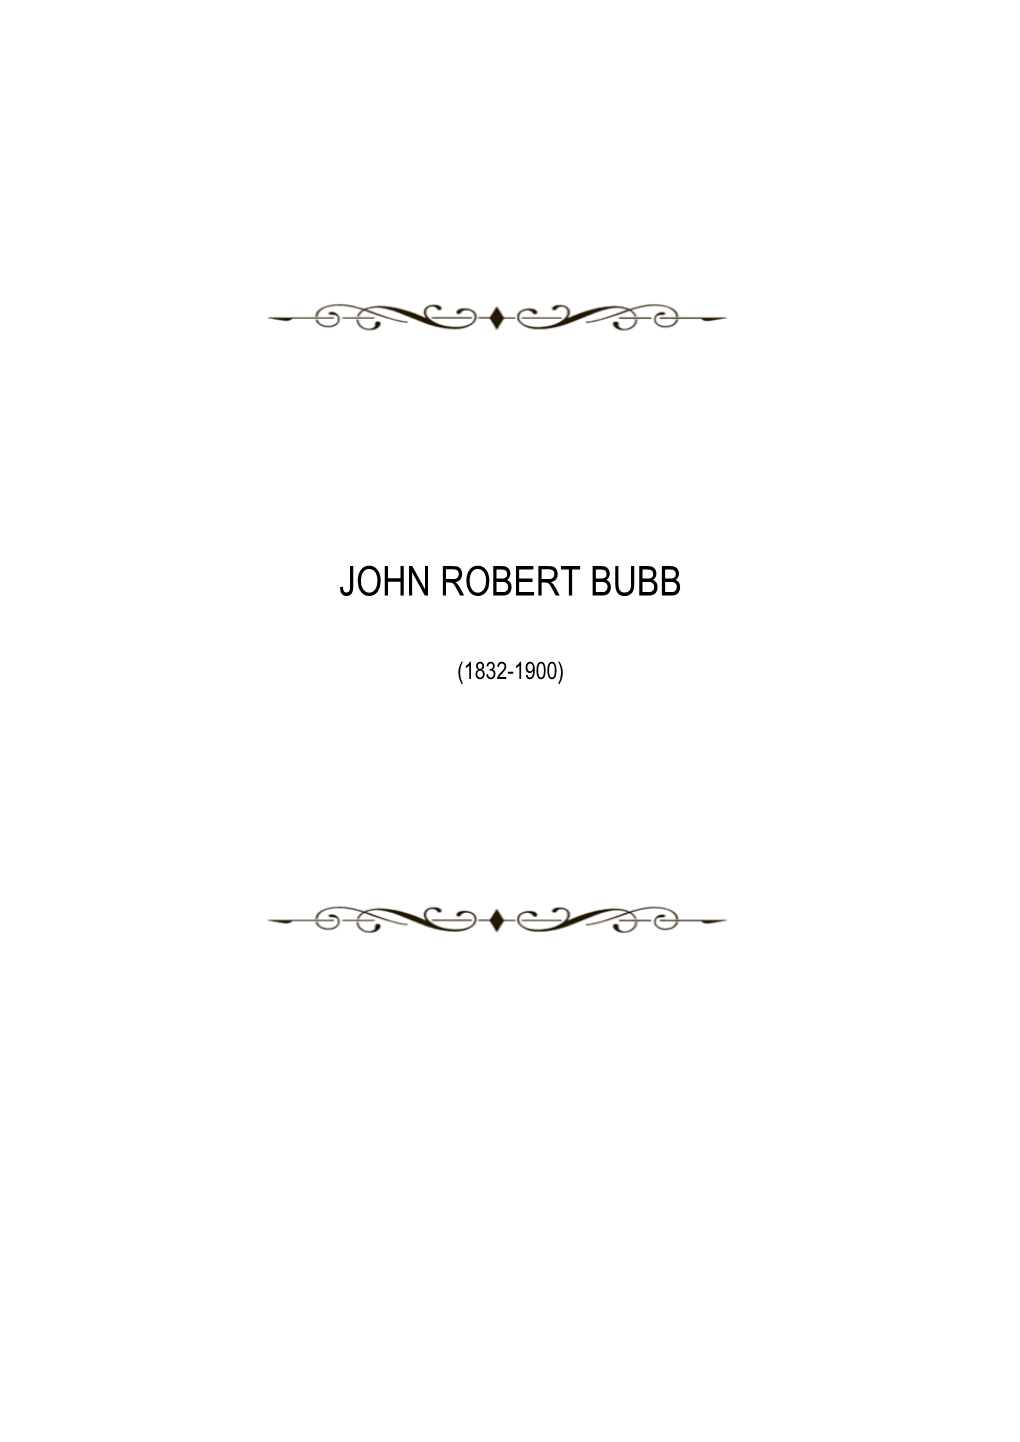 John Robert Bubb